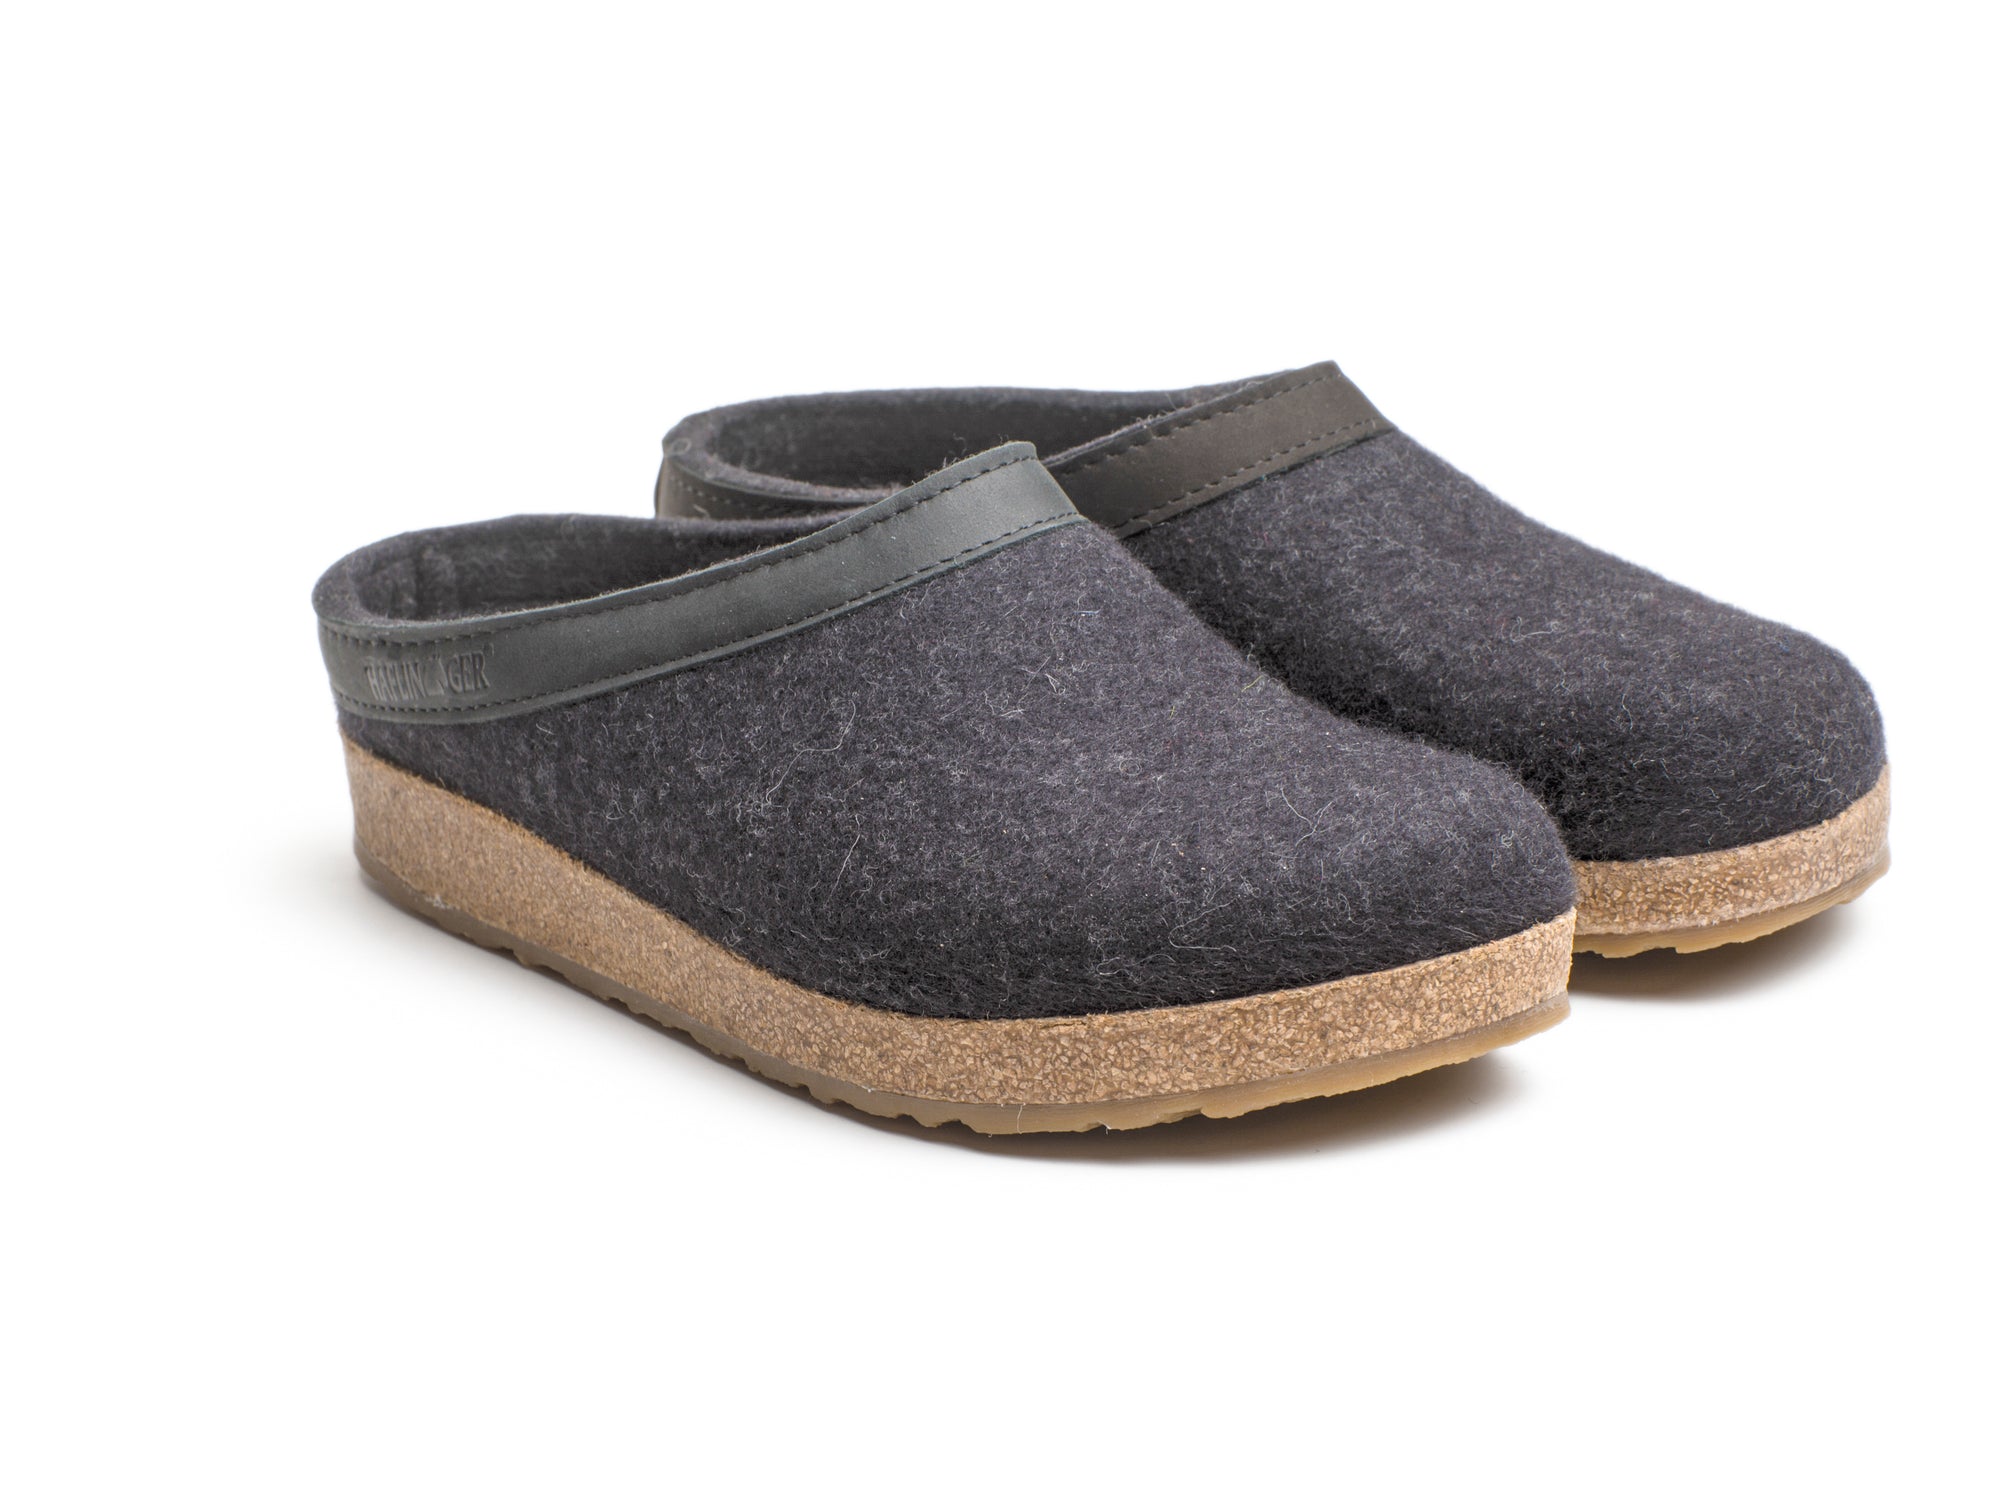 Men's slippers - wool